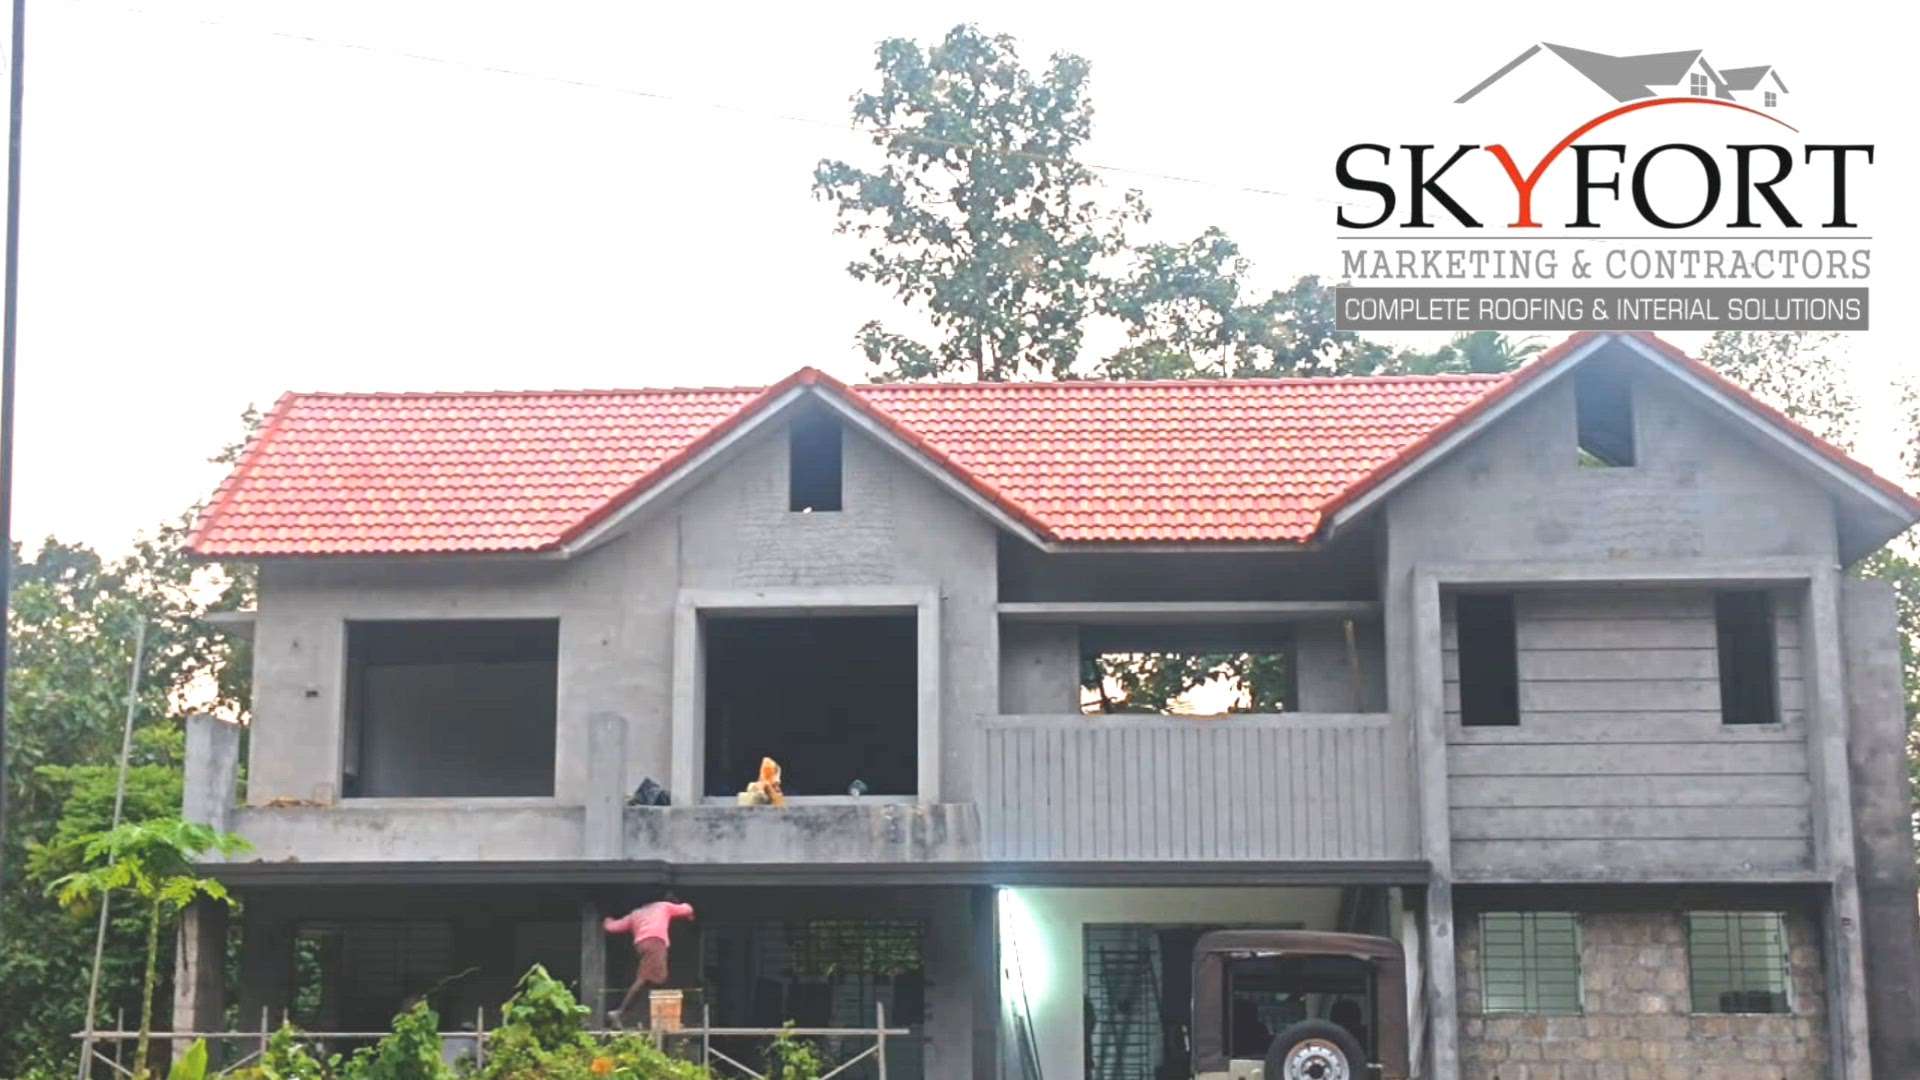 Works is progressing✨✌️

Contact :-
@skyfortroofing

🌏 www.skyfortroofing.com

📞98471 90501

 -94967 69501

  9072310416 (Office)

📩info@skyfortroofing.com

.
.
.
.
....

.
.
.
#roofing #rooftop #roofing contractor #roofingcompany #roofingservices #roofingsolutions #roofingkerala #ernakulam #kochi #perumbavoor #kerlaroof #keralaroofing #keralanewhome #newconstructionhomes #newconstruction #keralaconstruction #sky #Skyfort #skyfortroofing #allkerala #all #keraladelivery #alldelivery